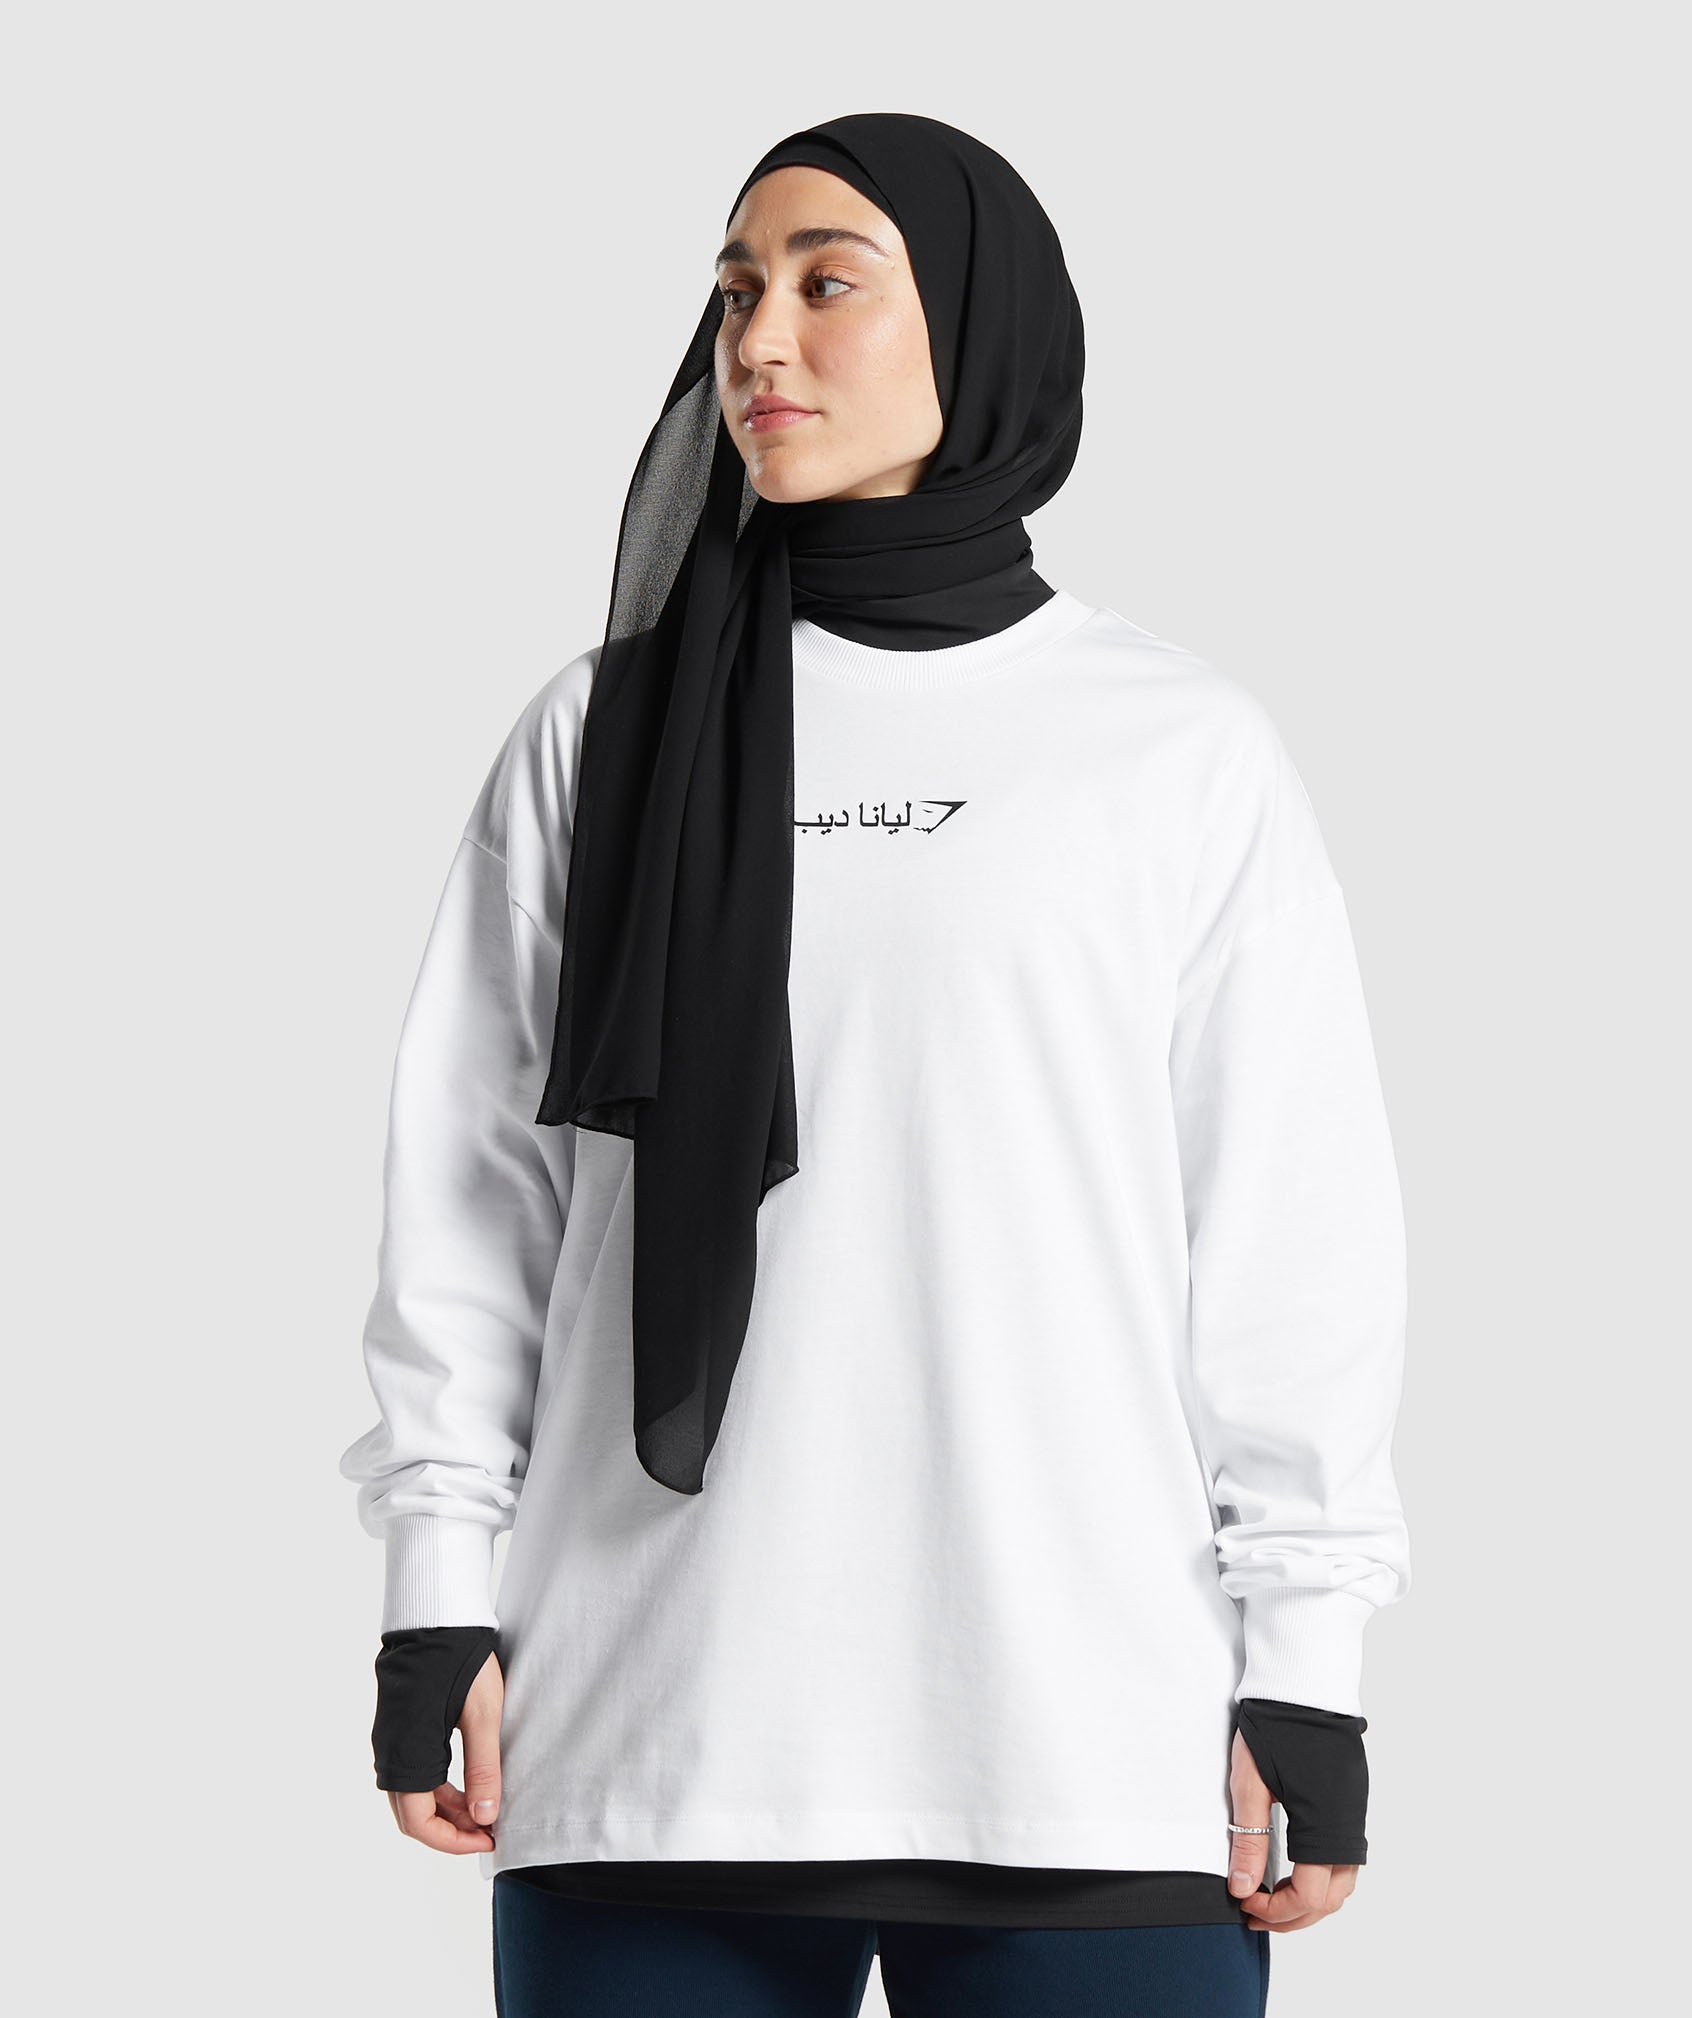 GS X Leana Deeb Oversized Long Sleeve Top in White is niet op voorraad